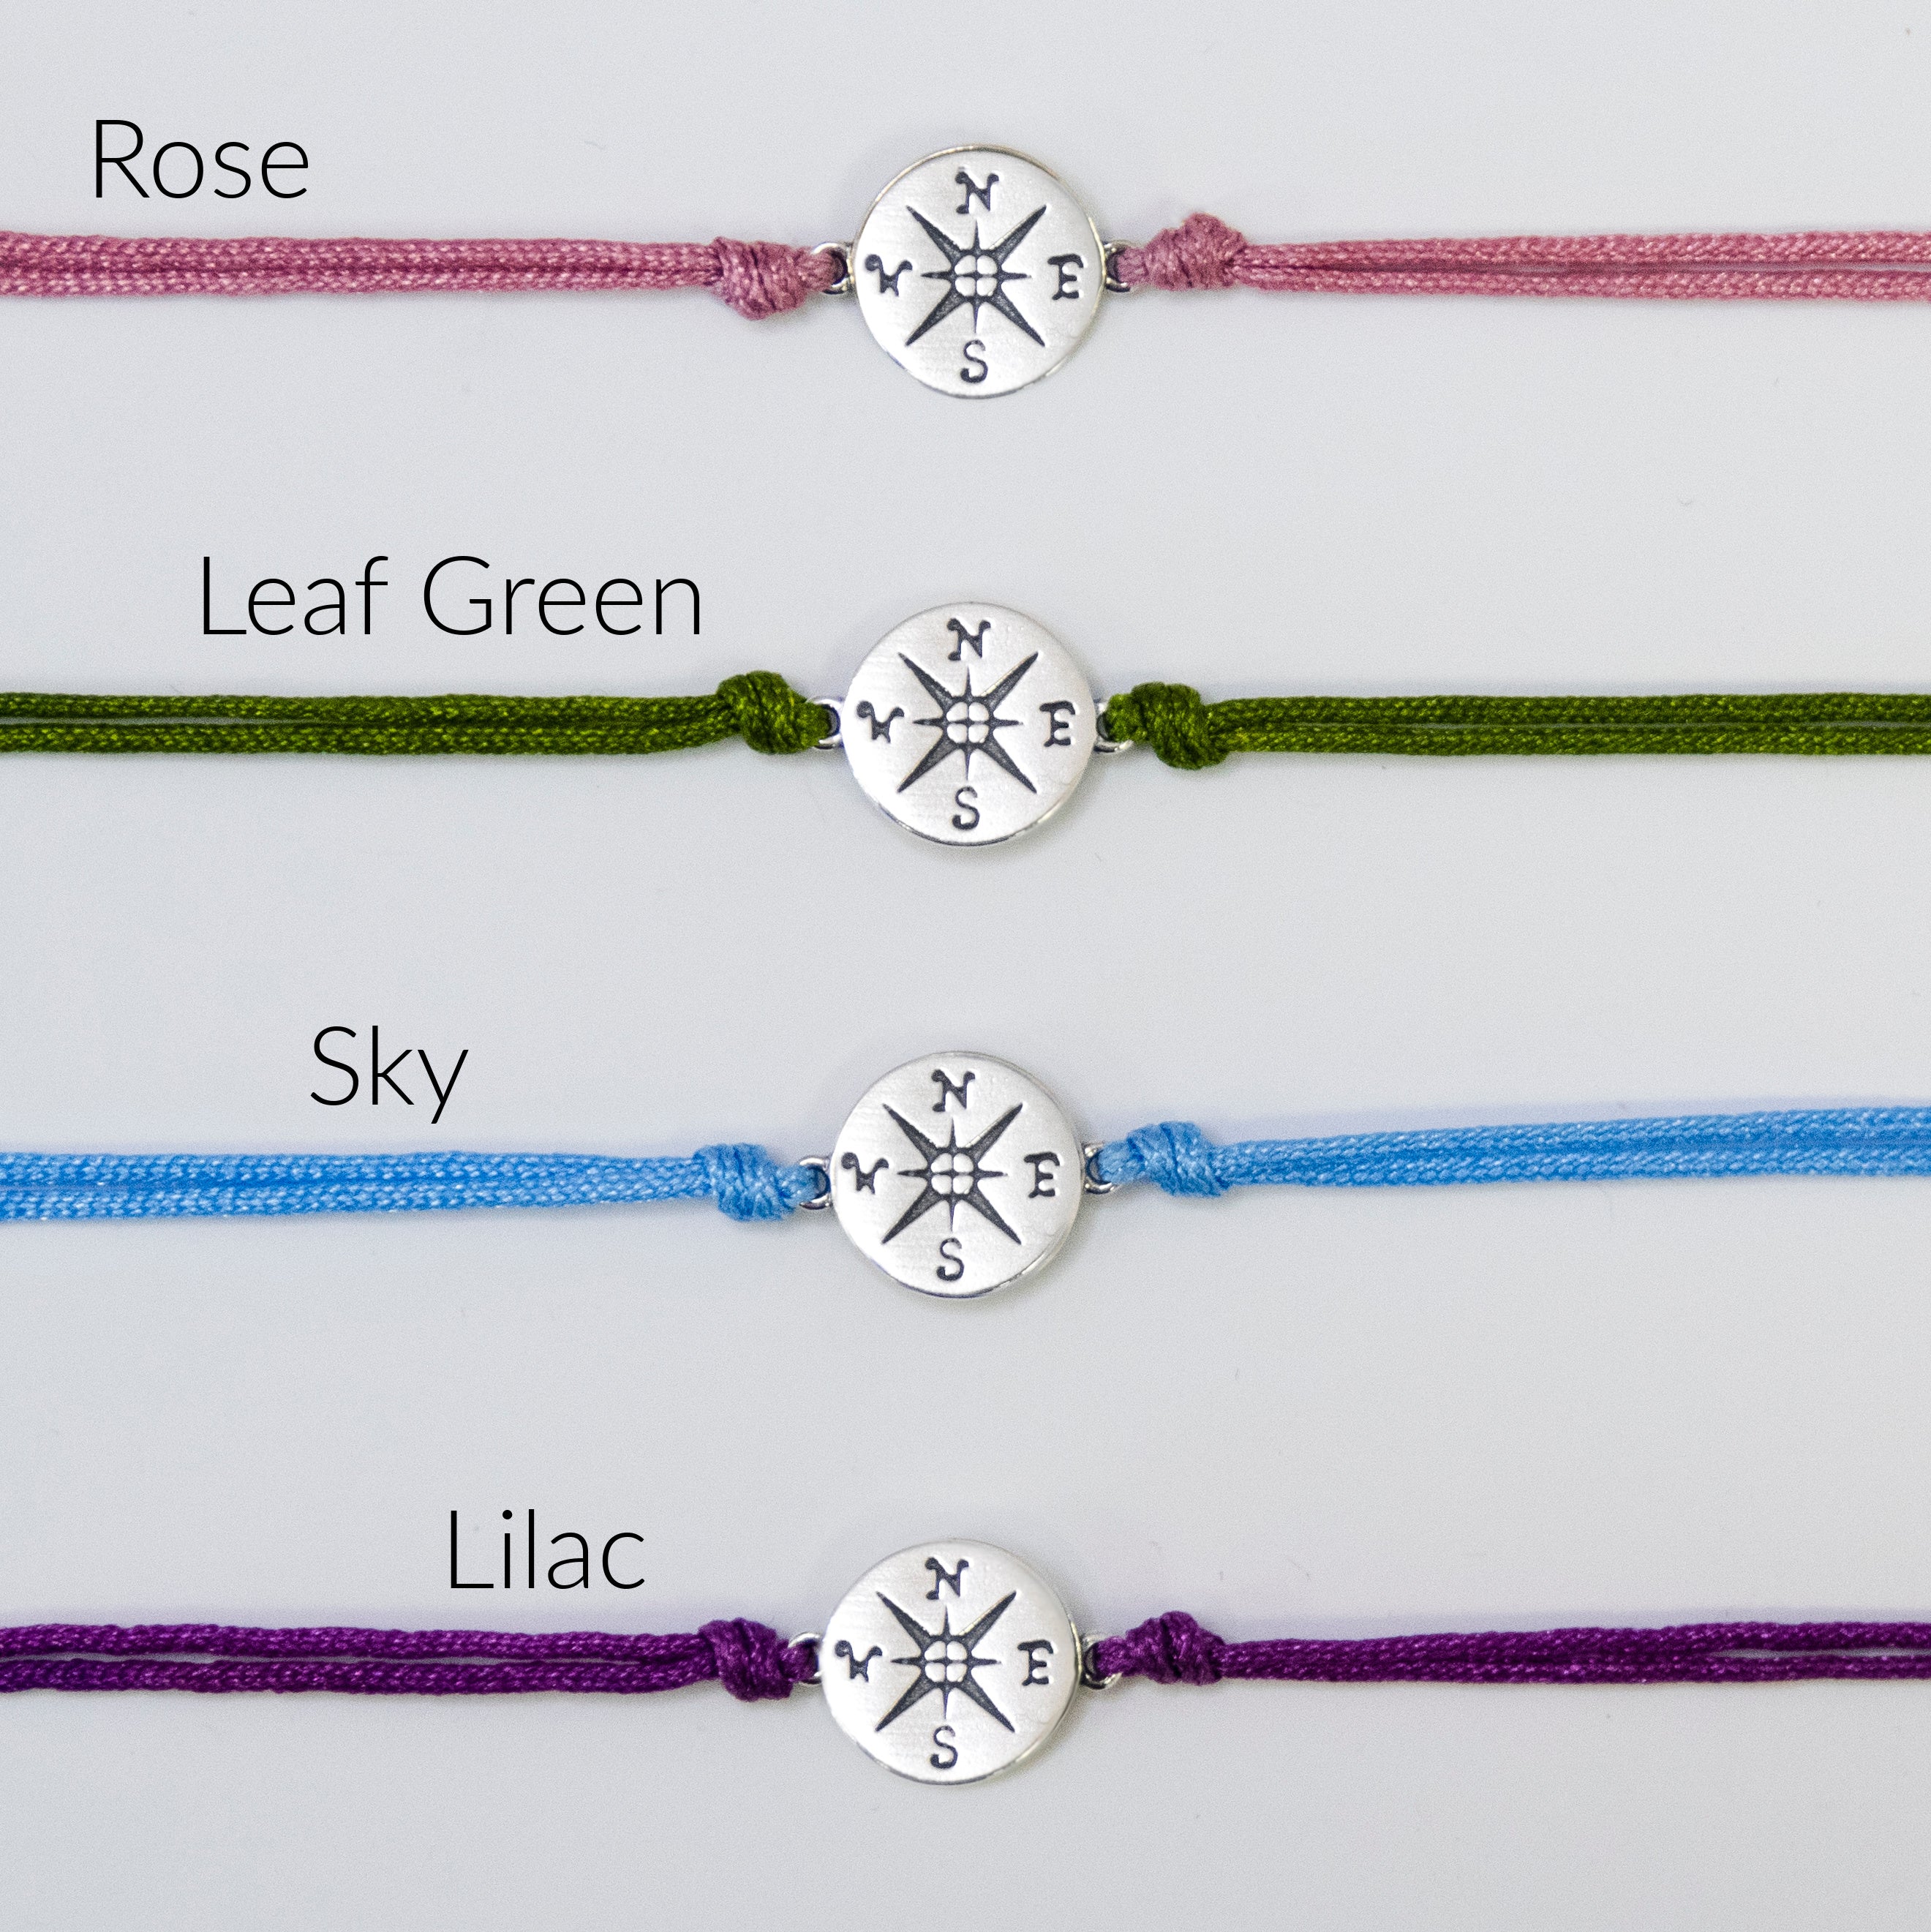 Long Distance Friendship Bracelet Set • EFYTAL 925 Silver Compass Set A (Rose Pink + Lilac Purple)